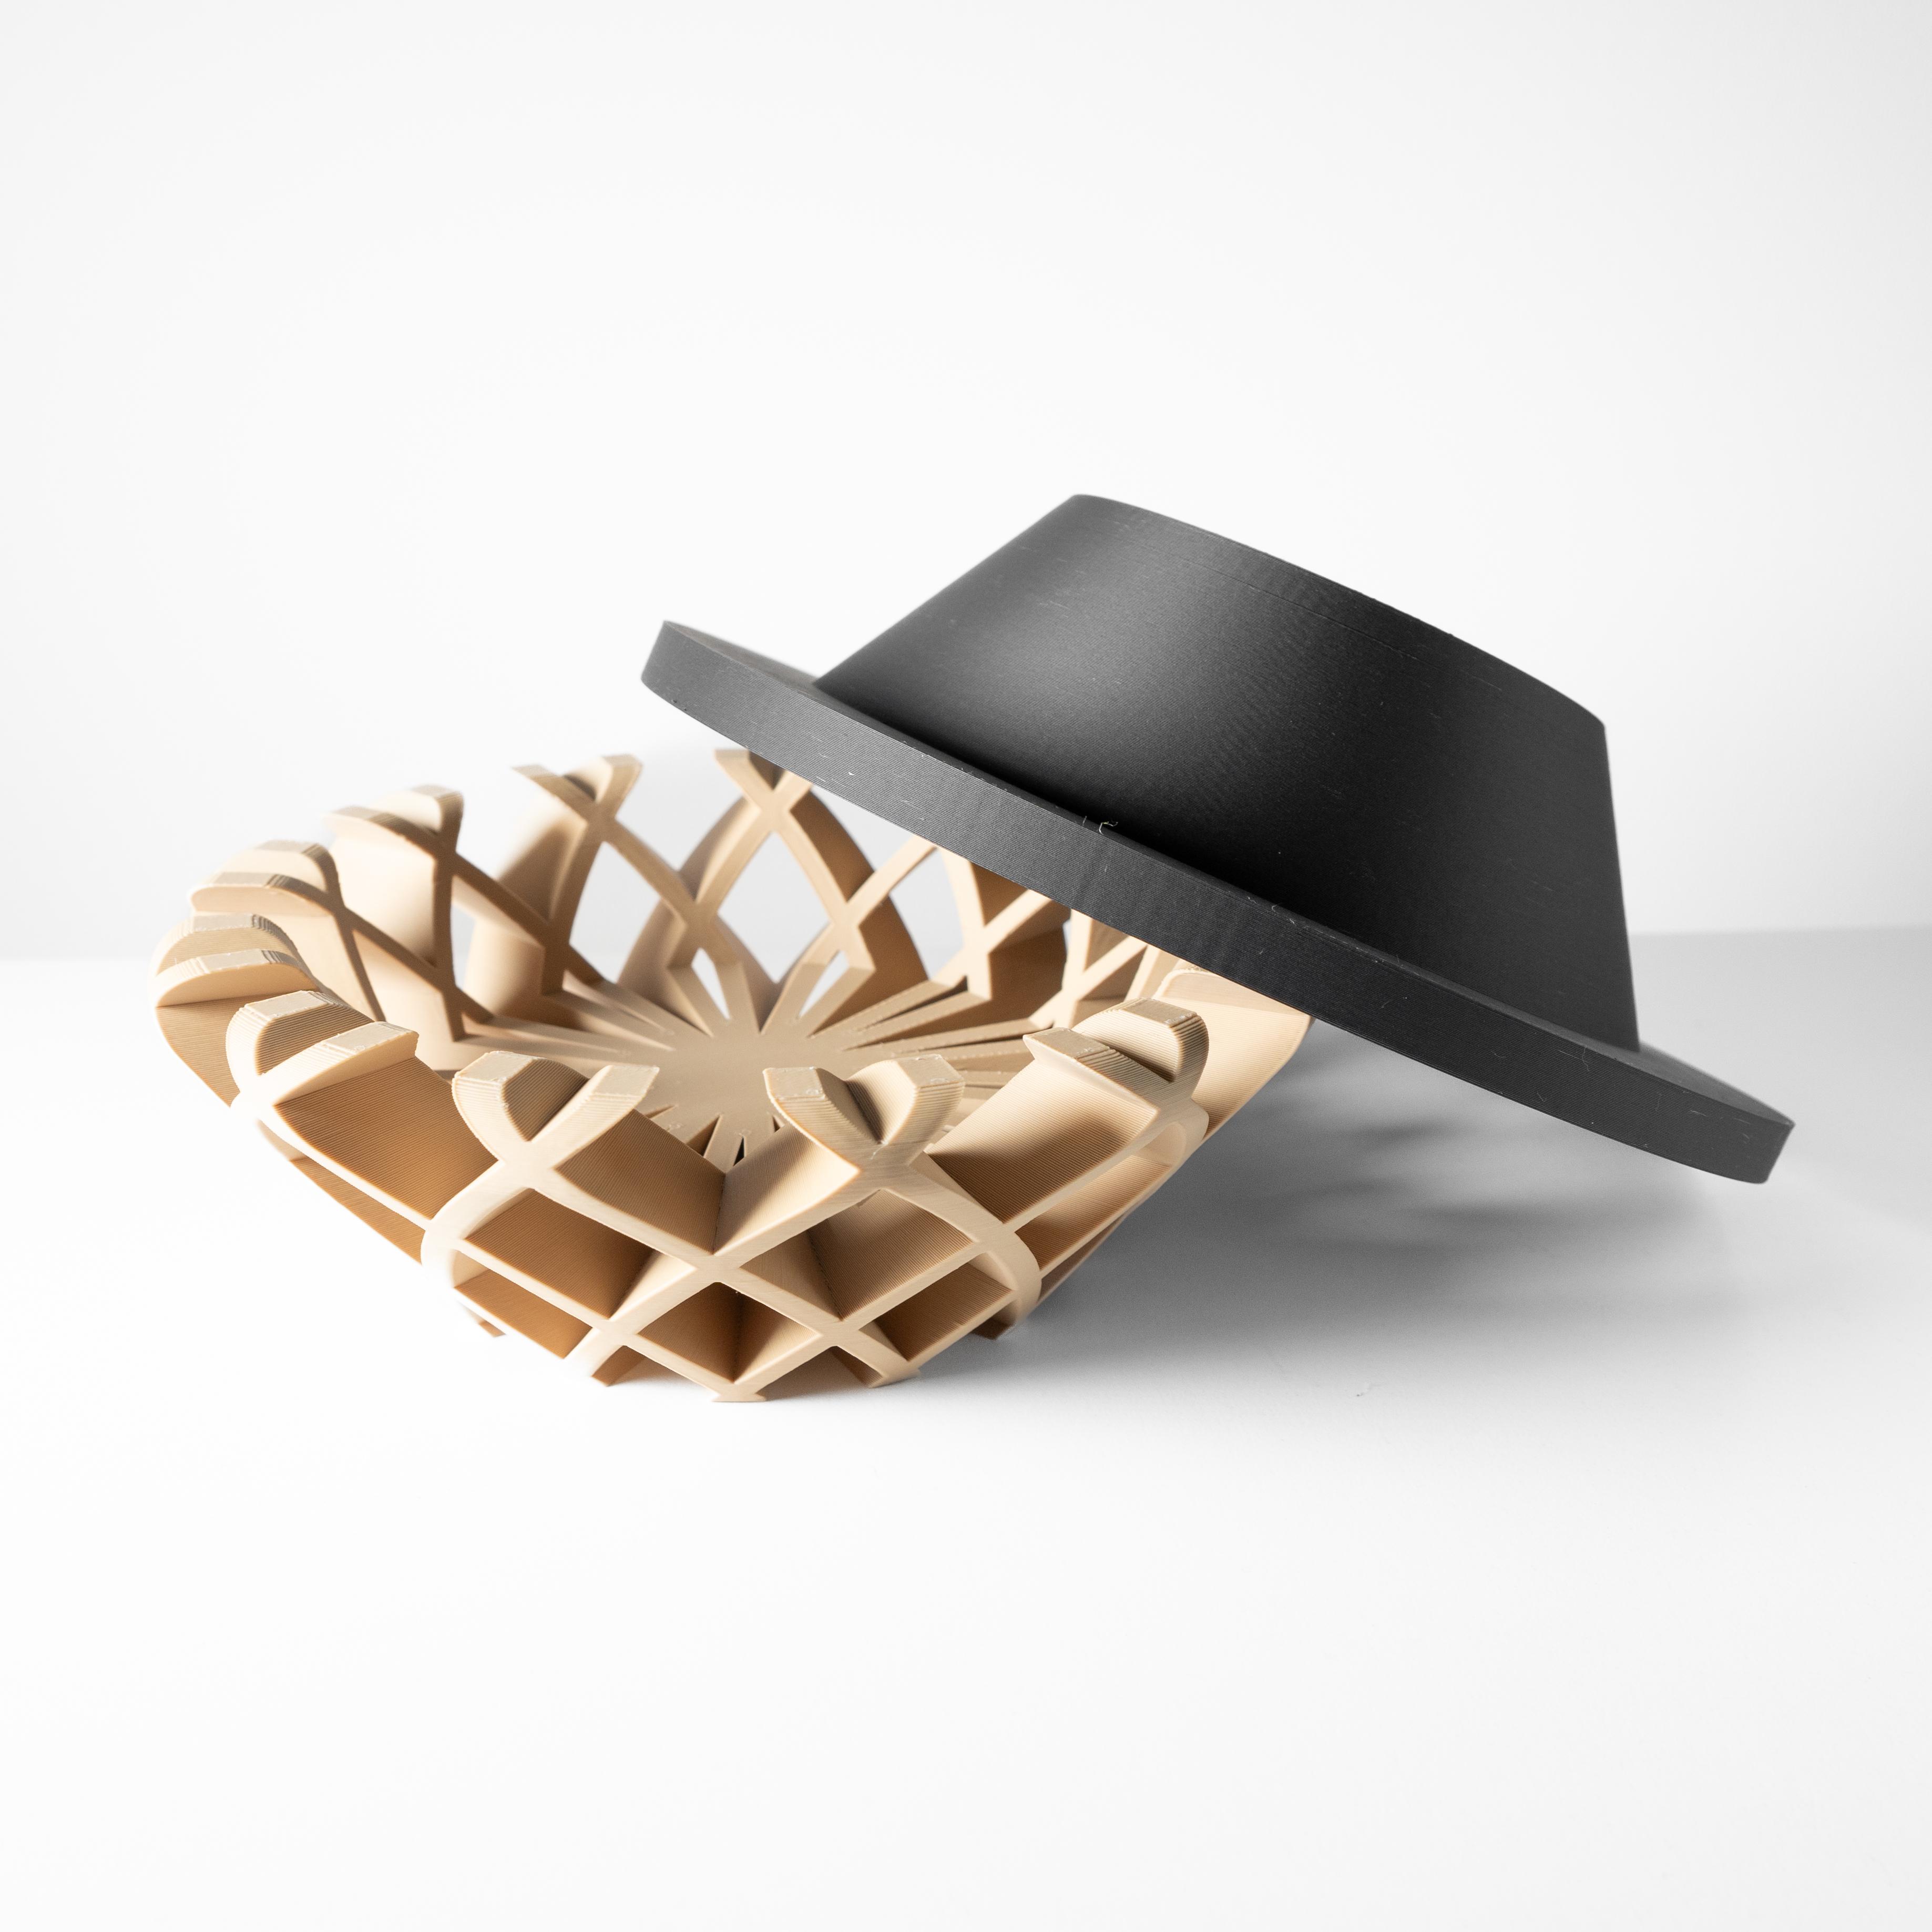 The Daki Catch-all Bowl or Desk Organizer | Modern Office and Home Decor 3d model